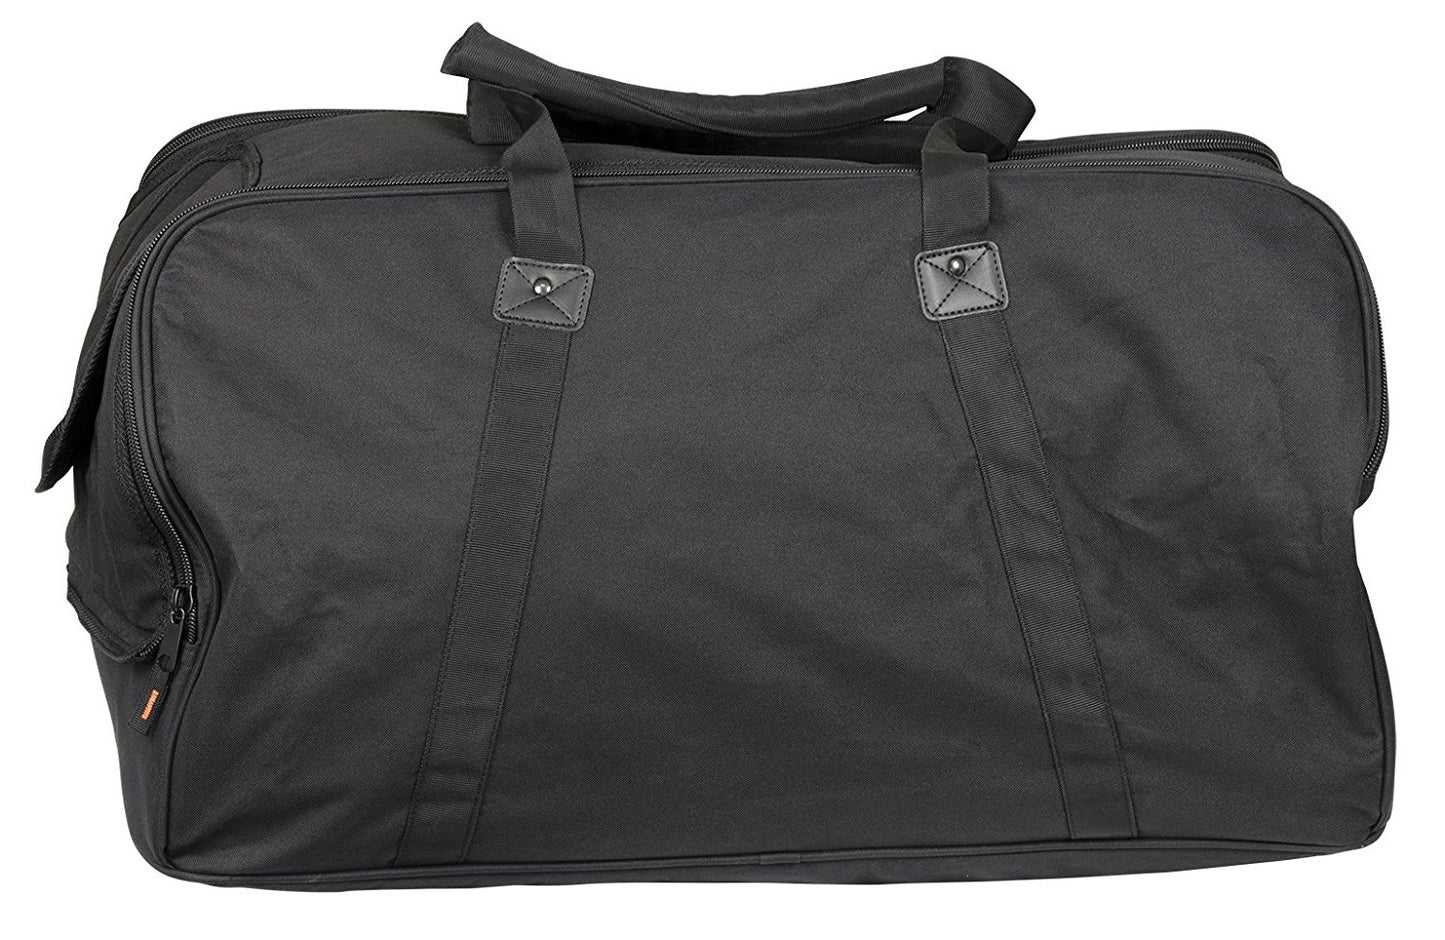 JBL Bags EON615-BAG Carry Bag Fits EON615